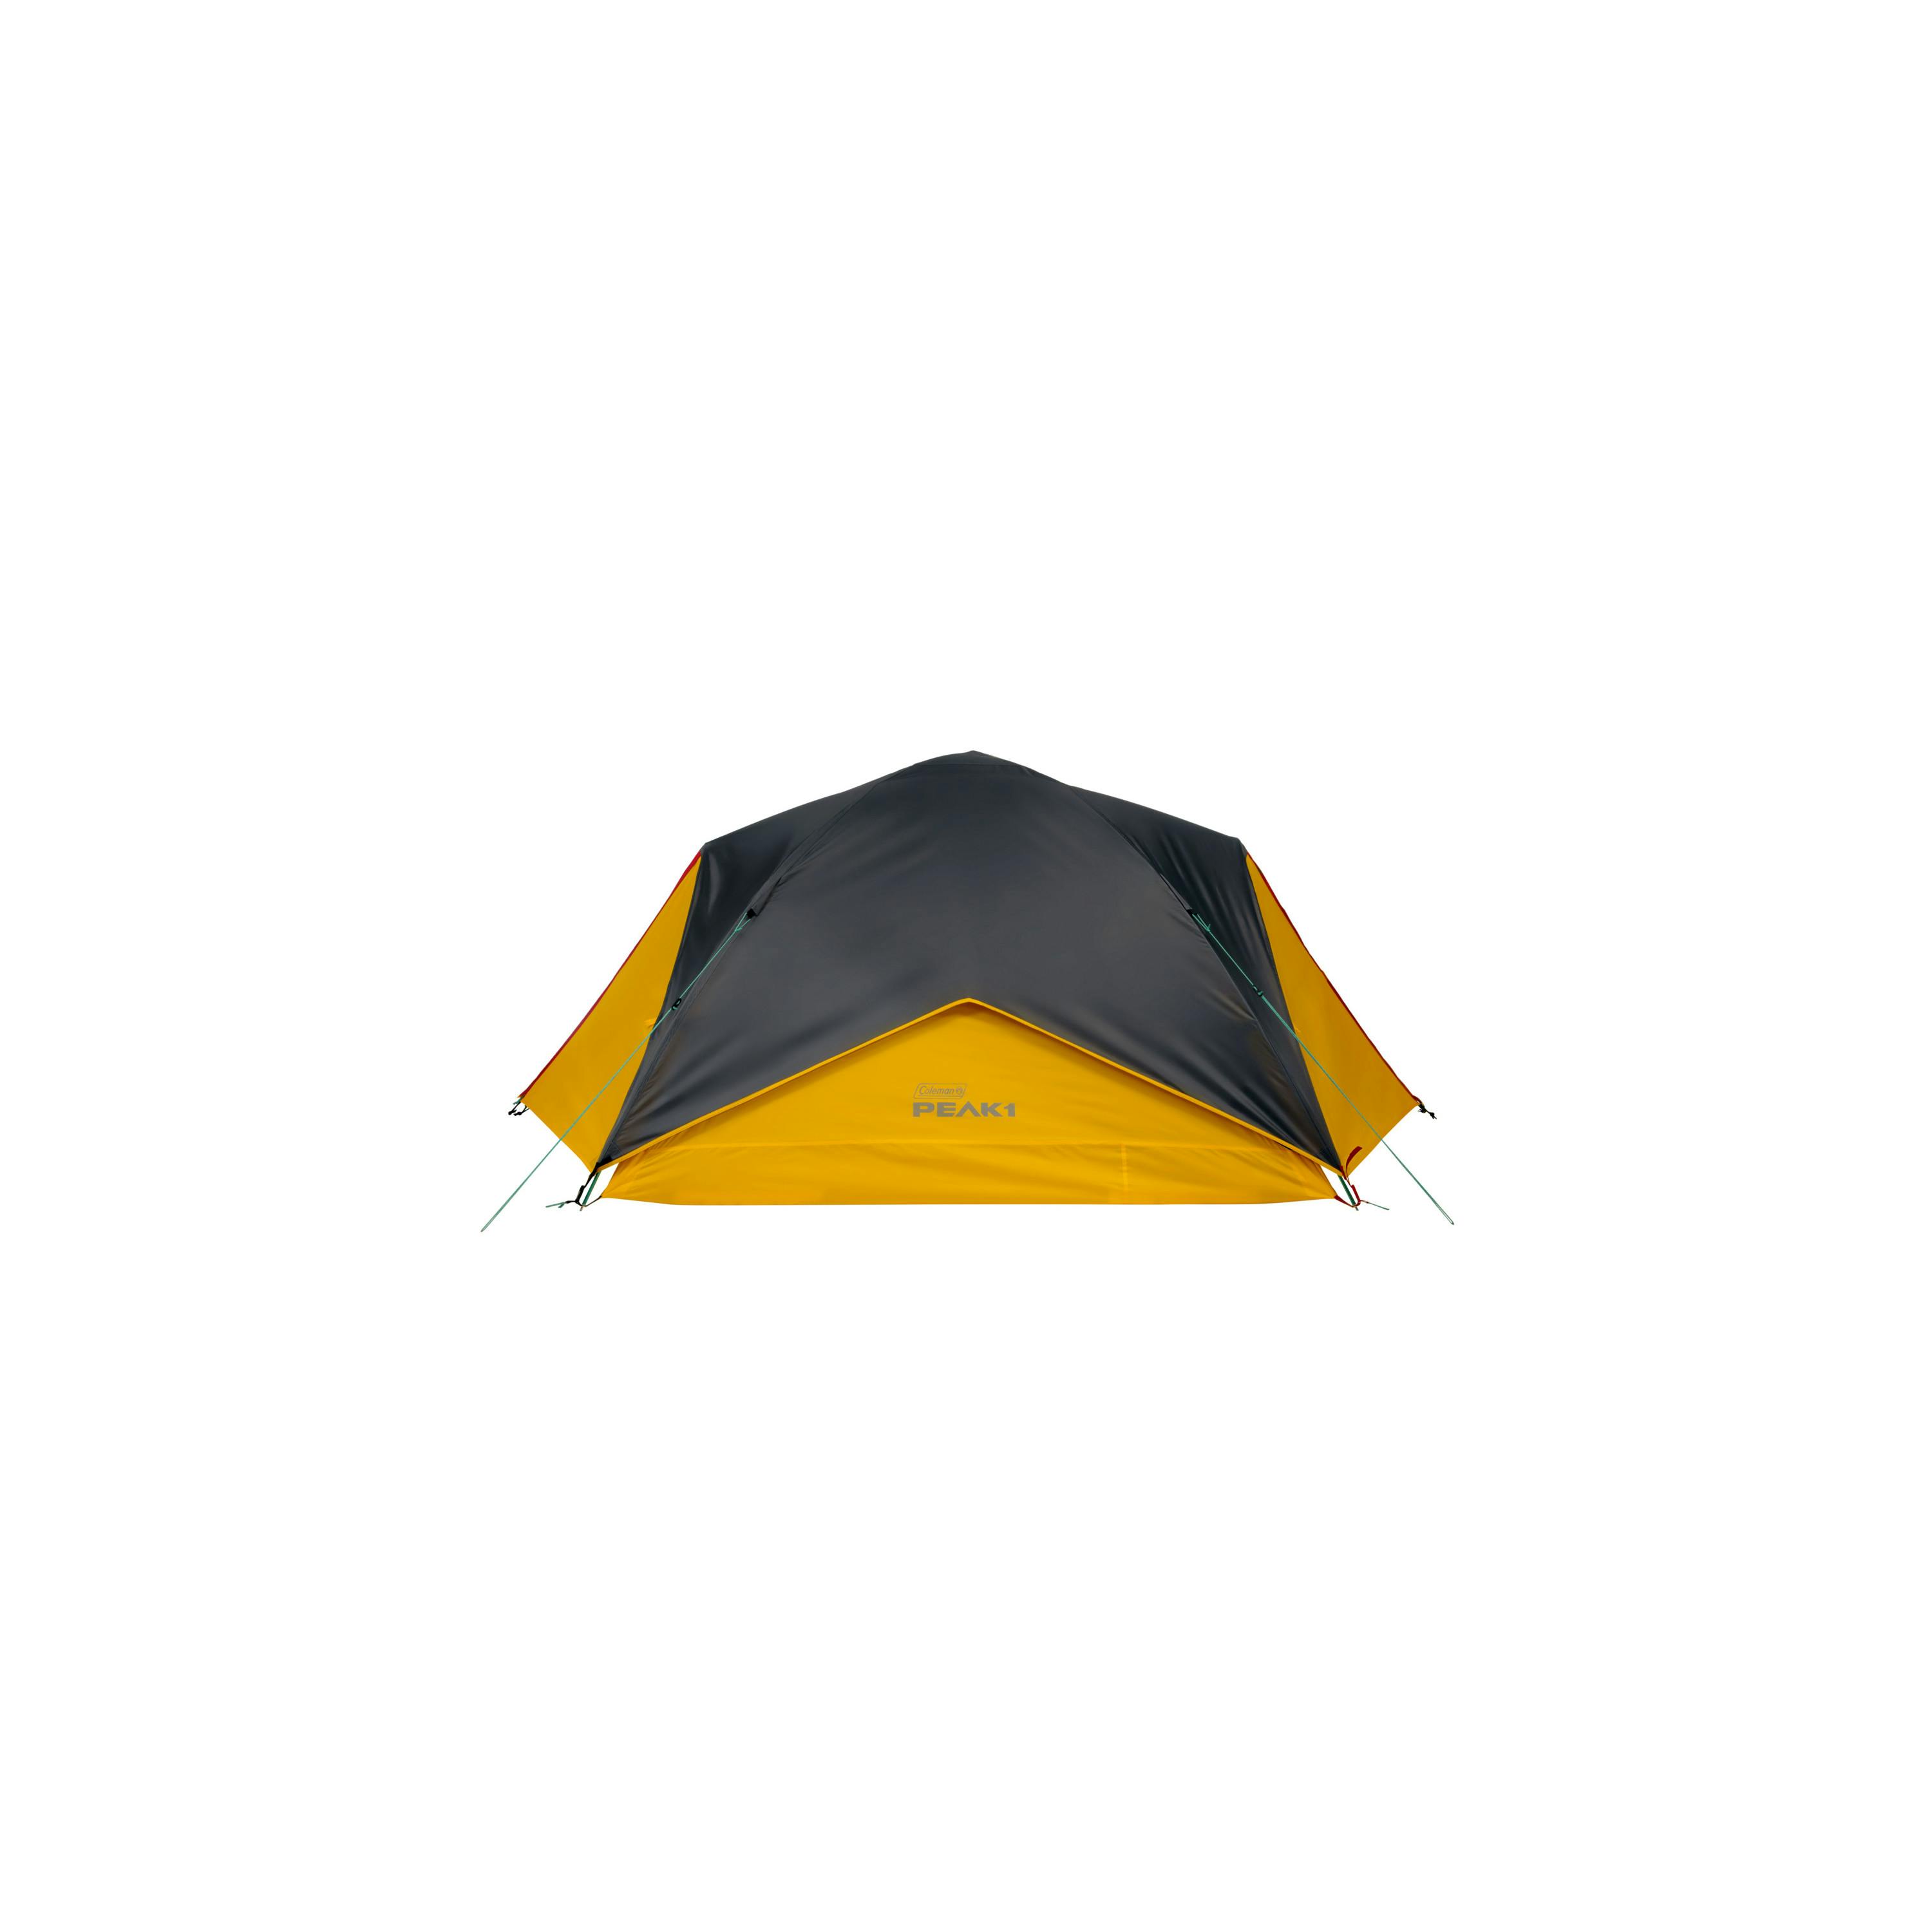 Coleman Peak1 Backpacking Tent · 3 Person​ · Marigold/Dark Stone